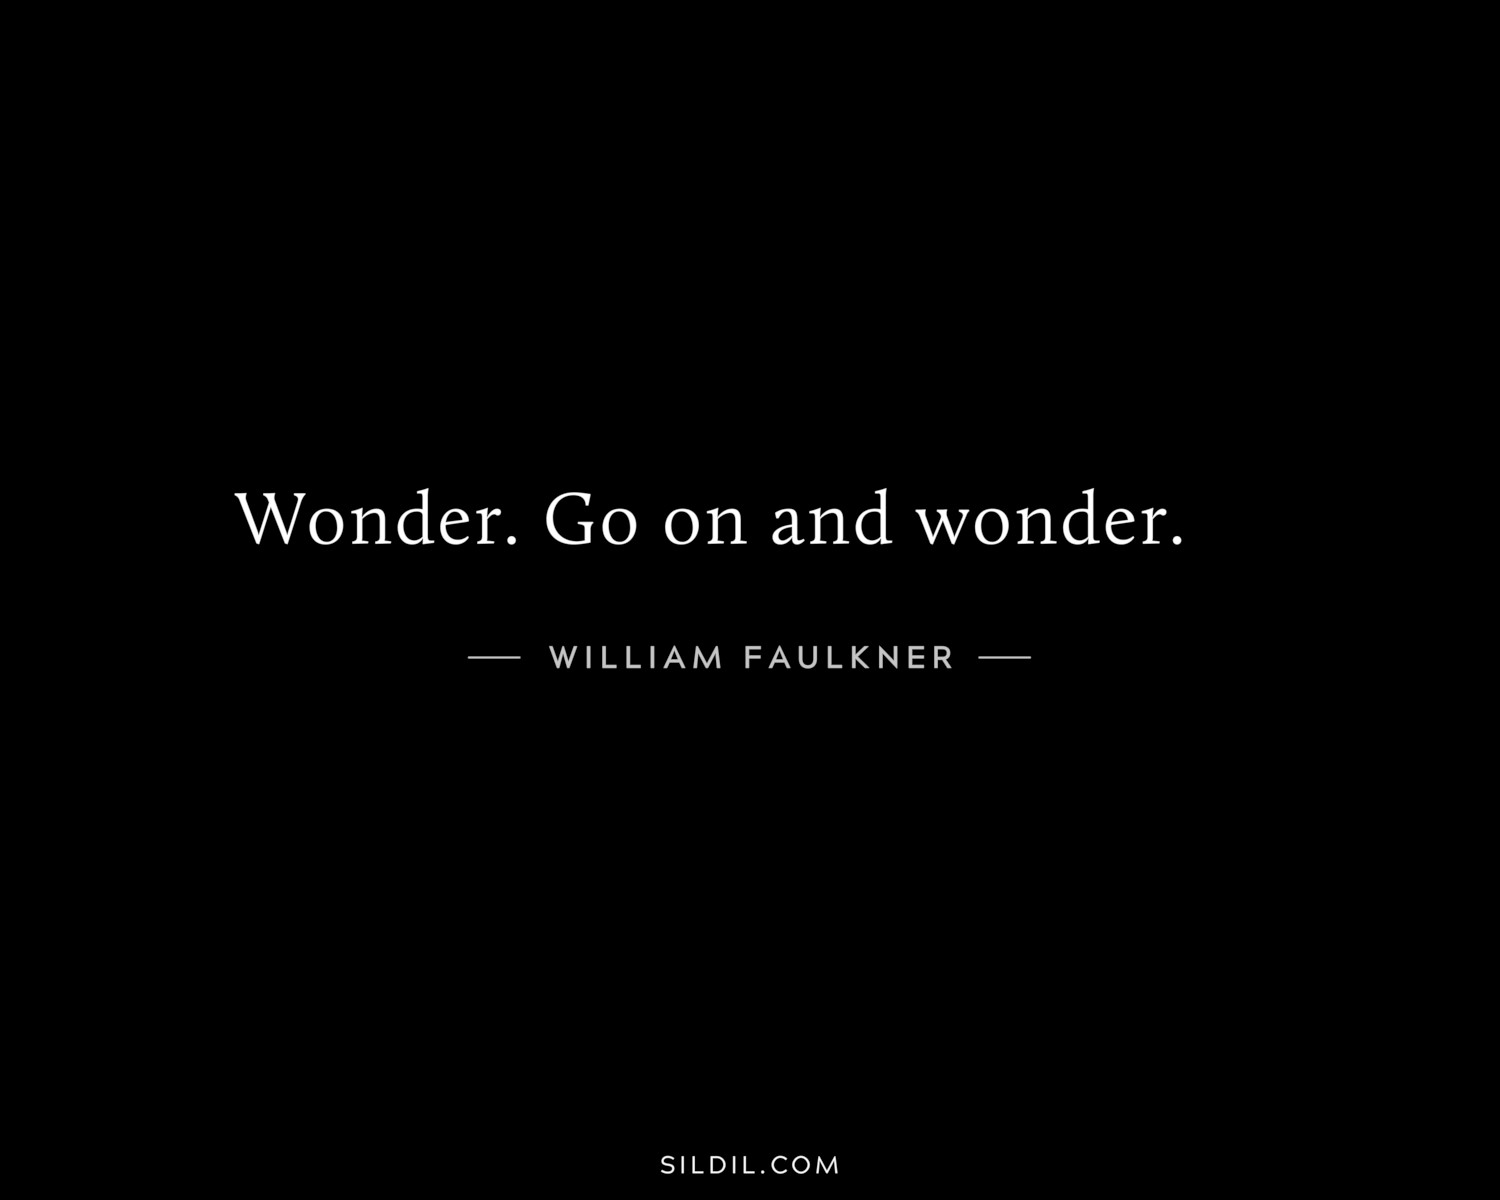 Wonder. Go on and wonder.